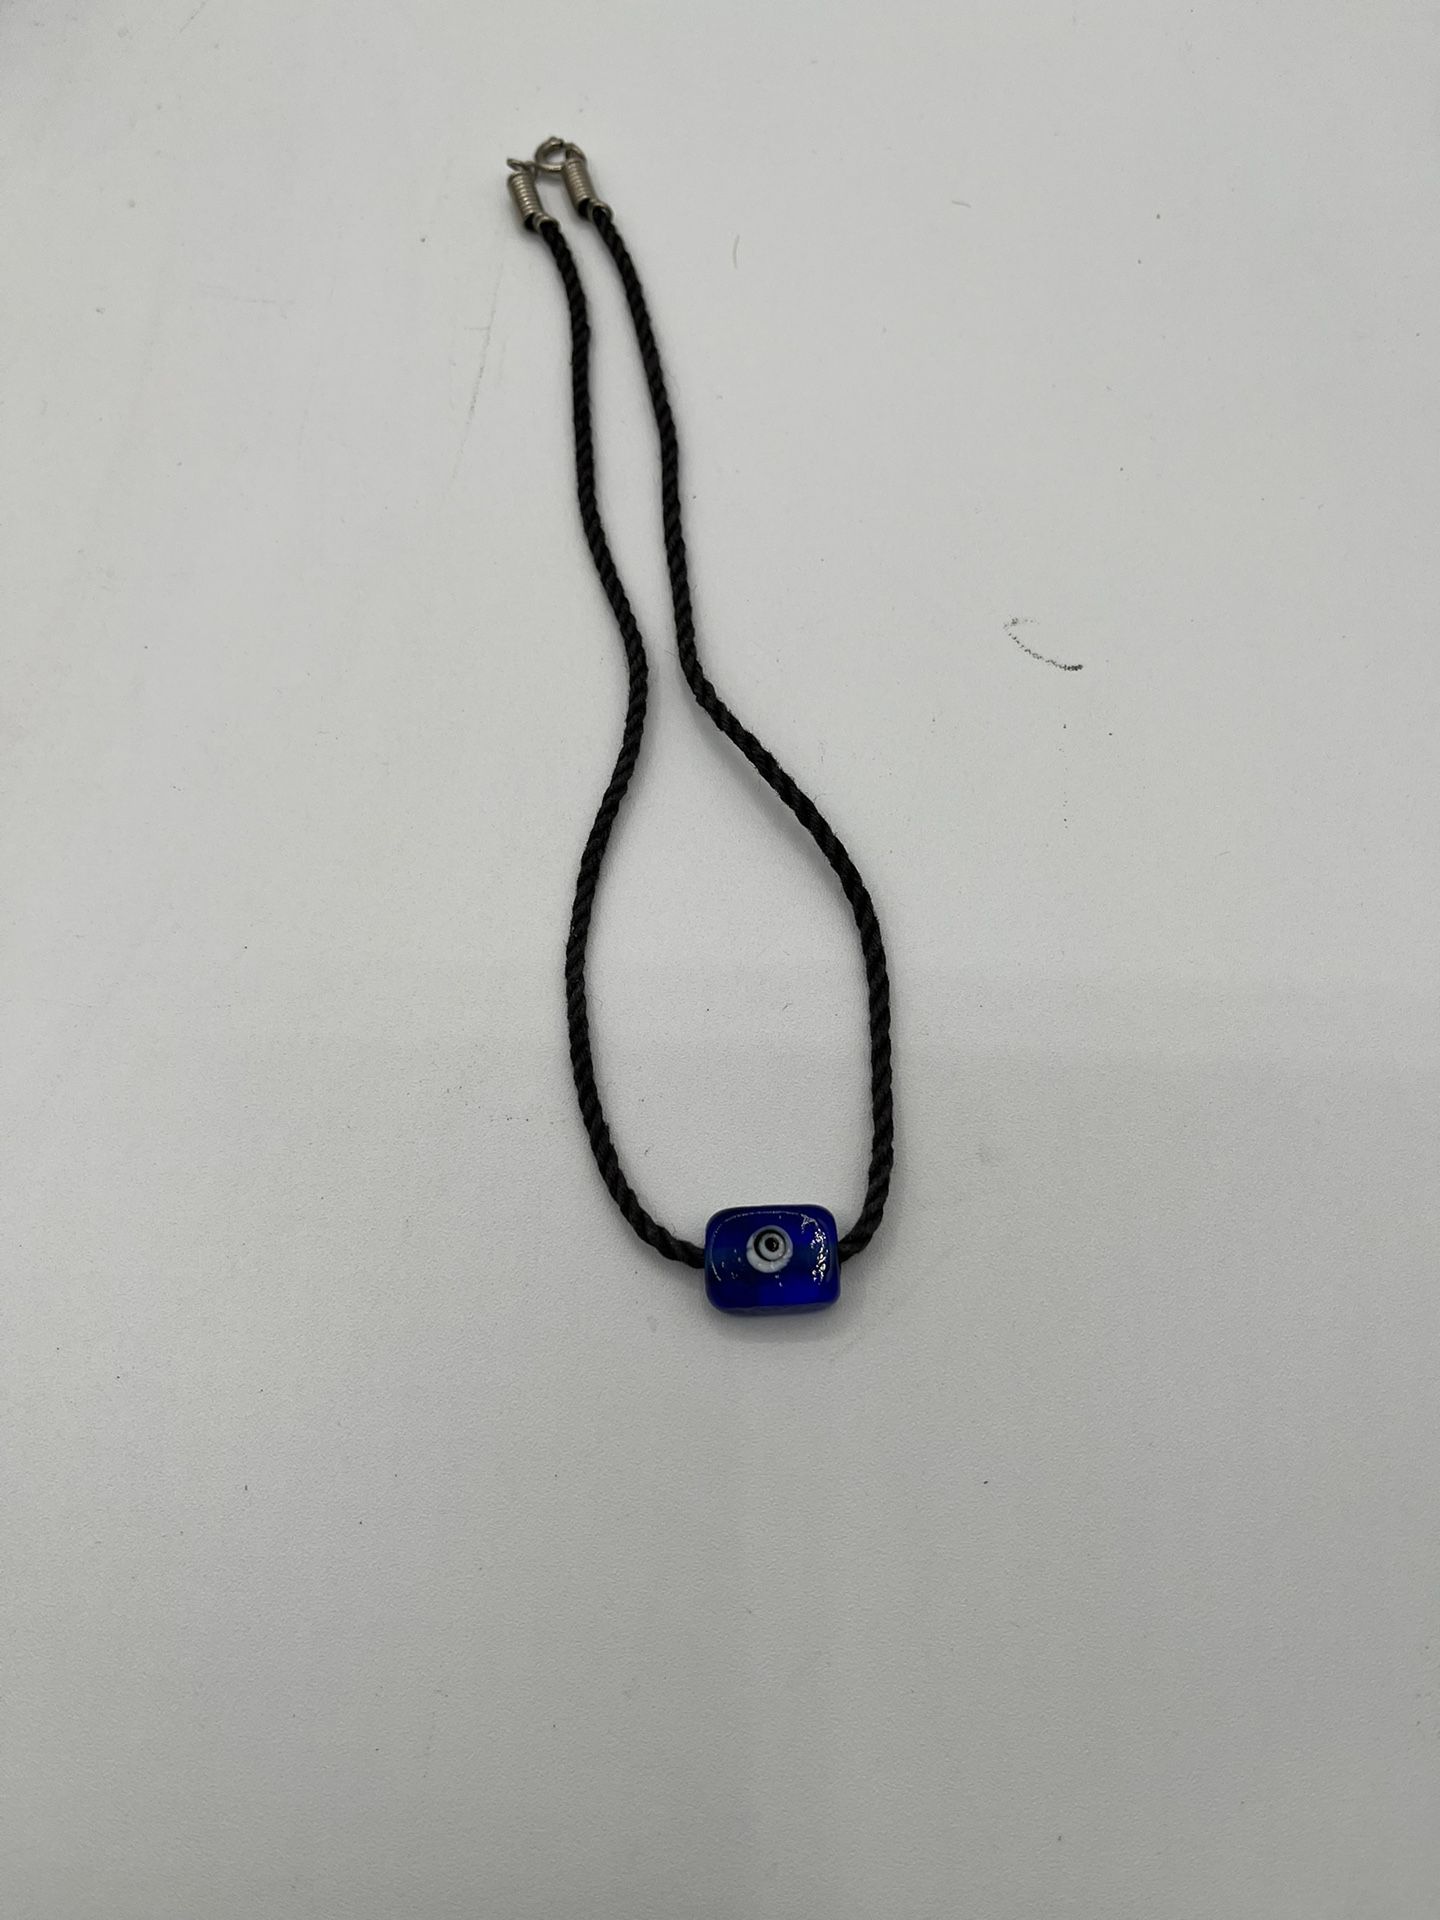 Blue Small Rectangular Pendant Choker Necklace